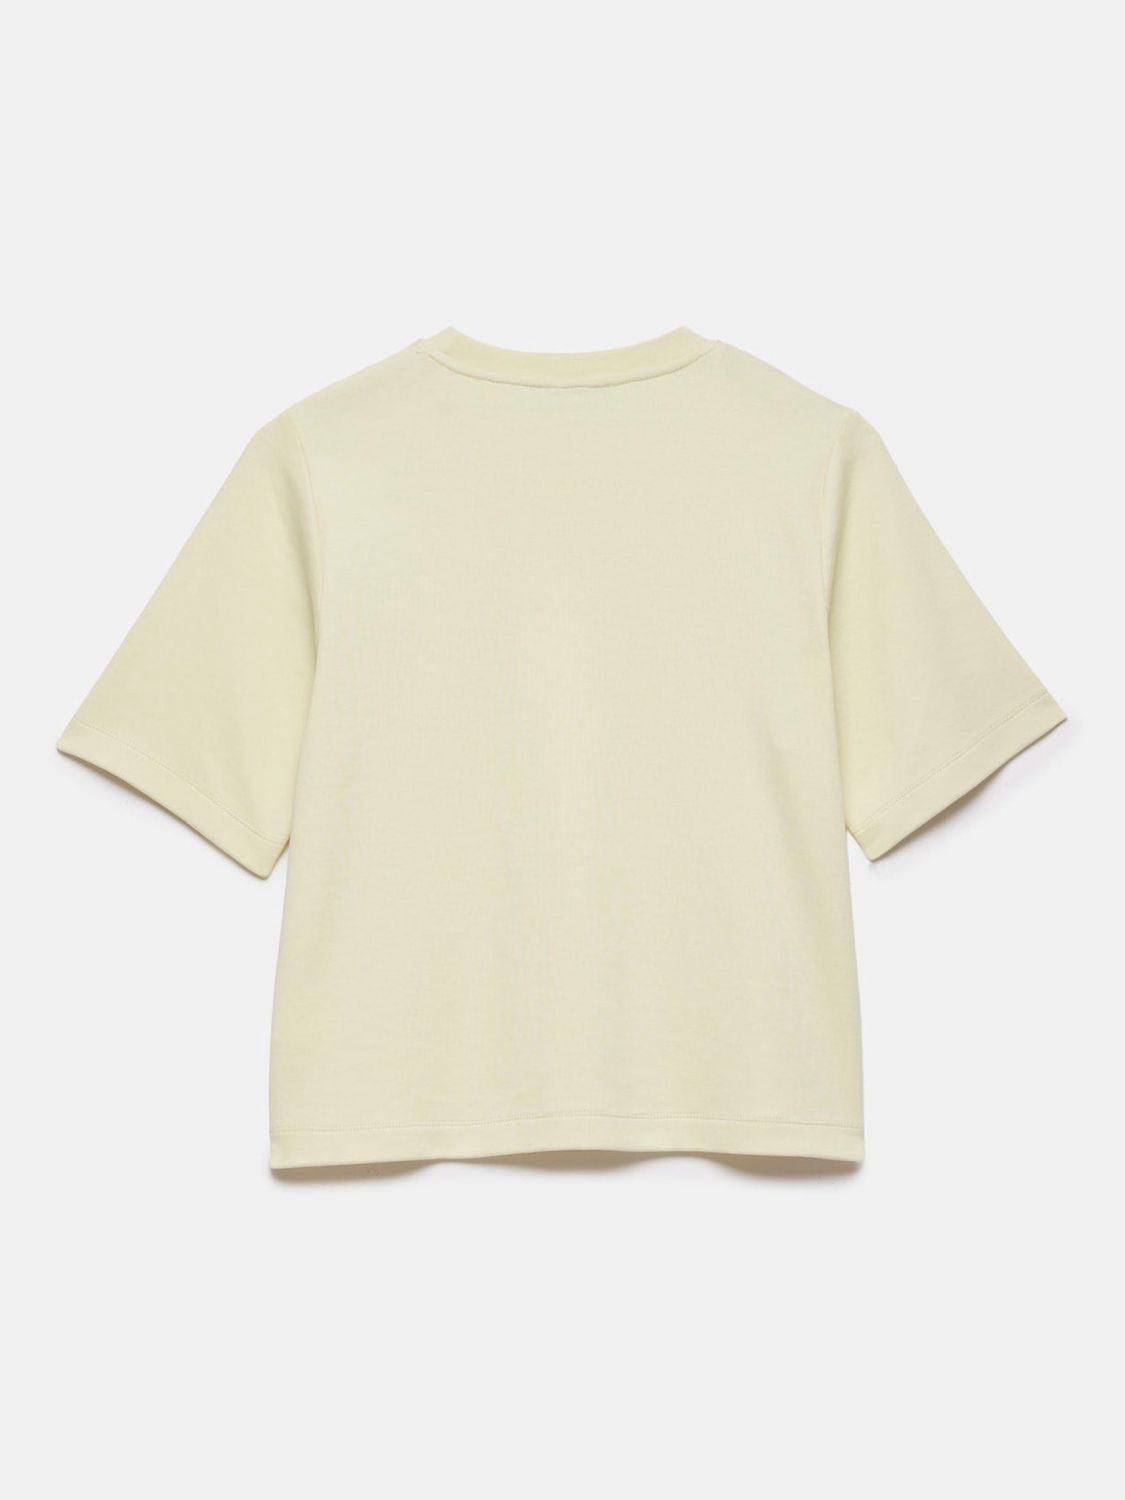 Mint Velvet Ultimate Cotton T-Shirt, Yellow, XS